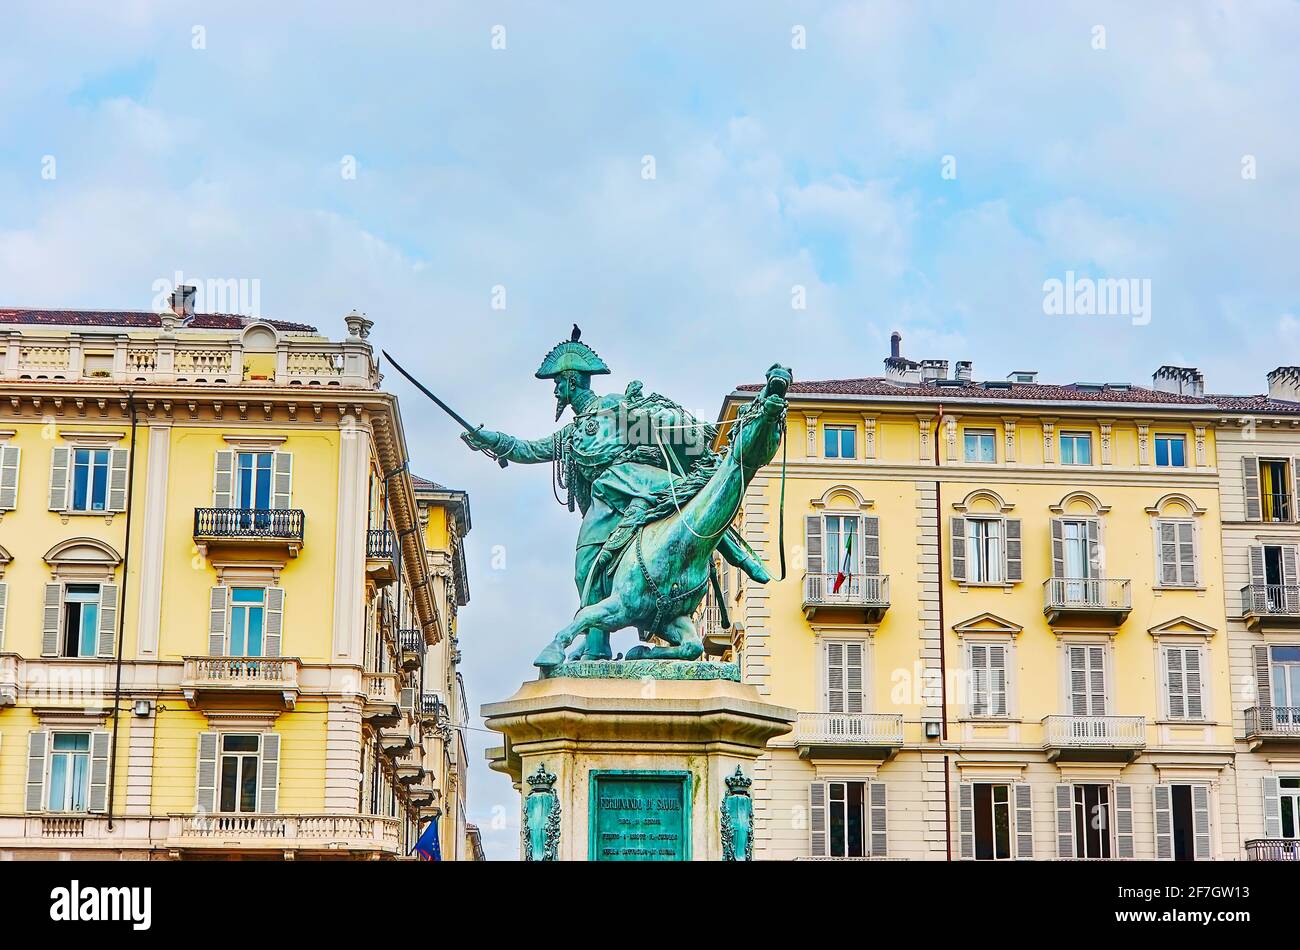 The masterpiece bronze equestrian statue of Ferdinand of Savoy, located in Piazza Solferino Square, Turin, Italy Stock Photo